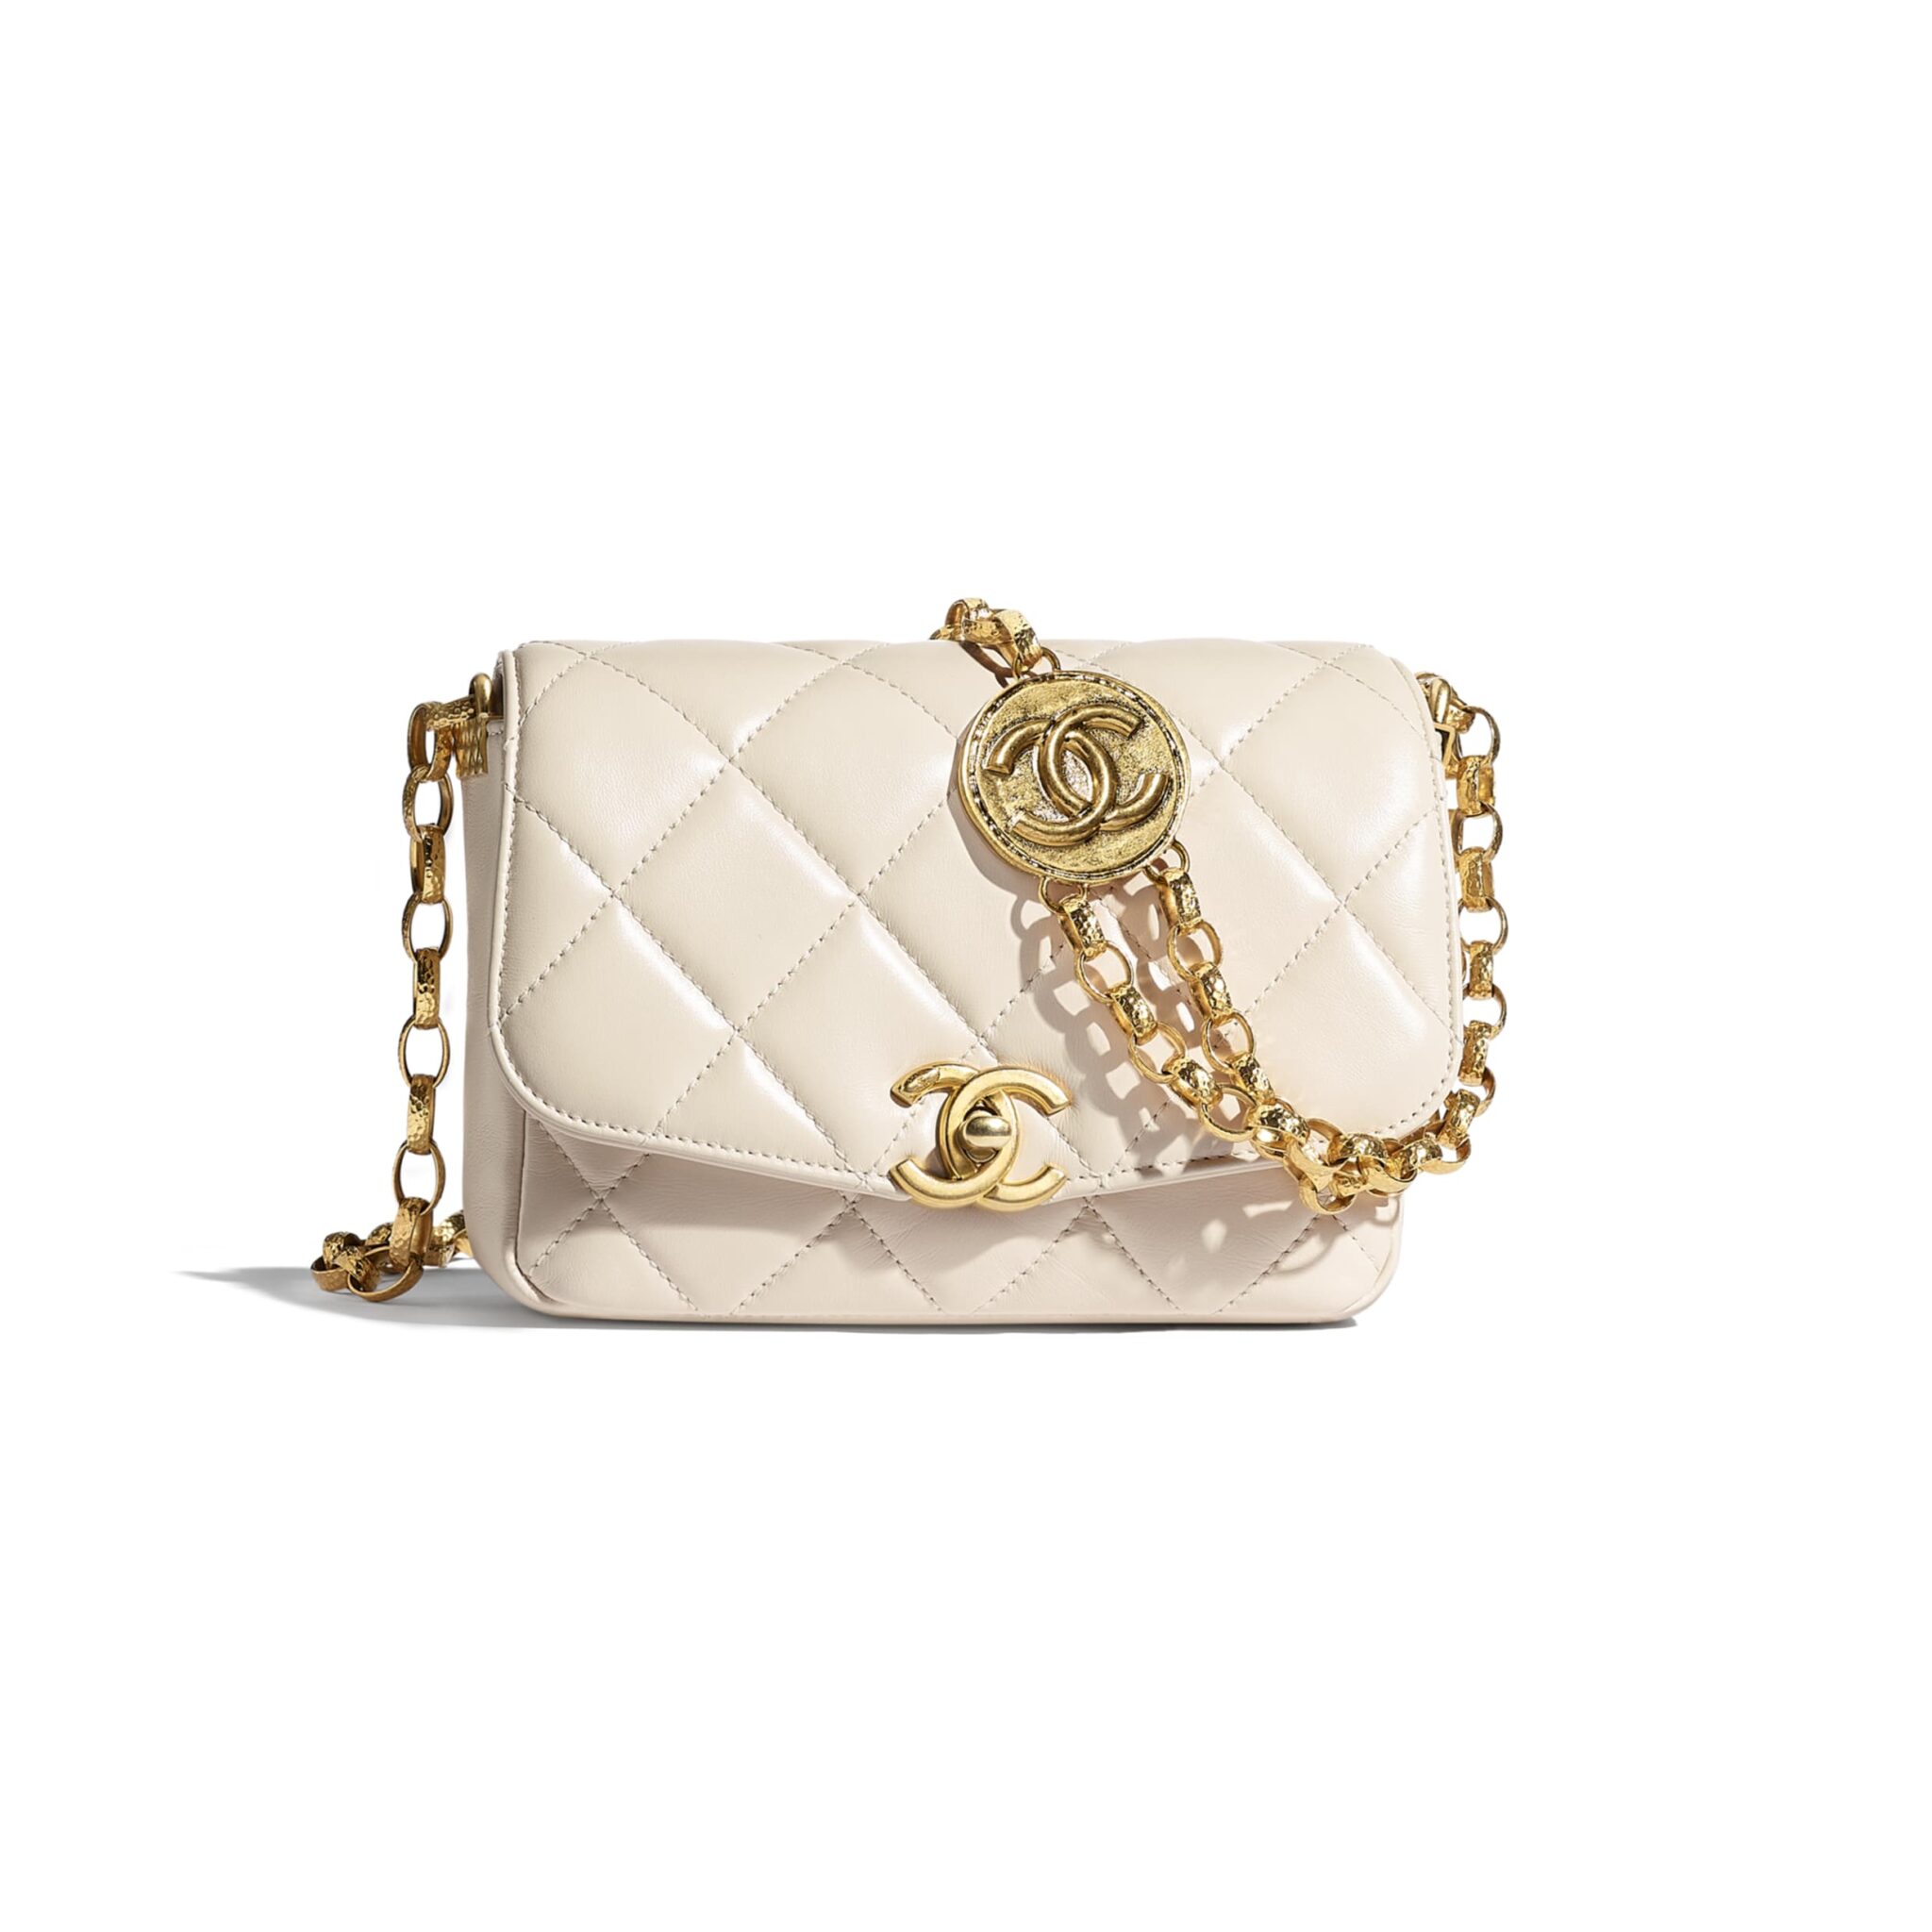 Chanel Handbags New Collection 2020 | Literacy Basics